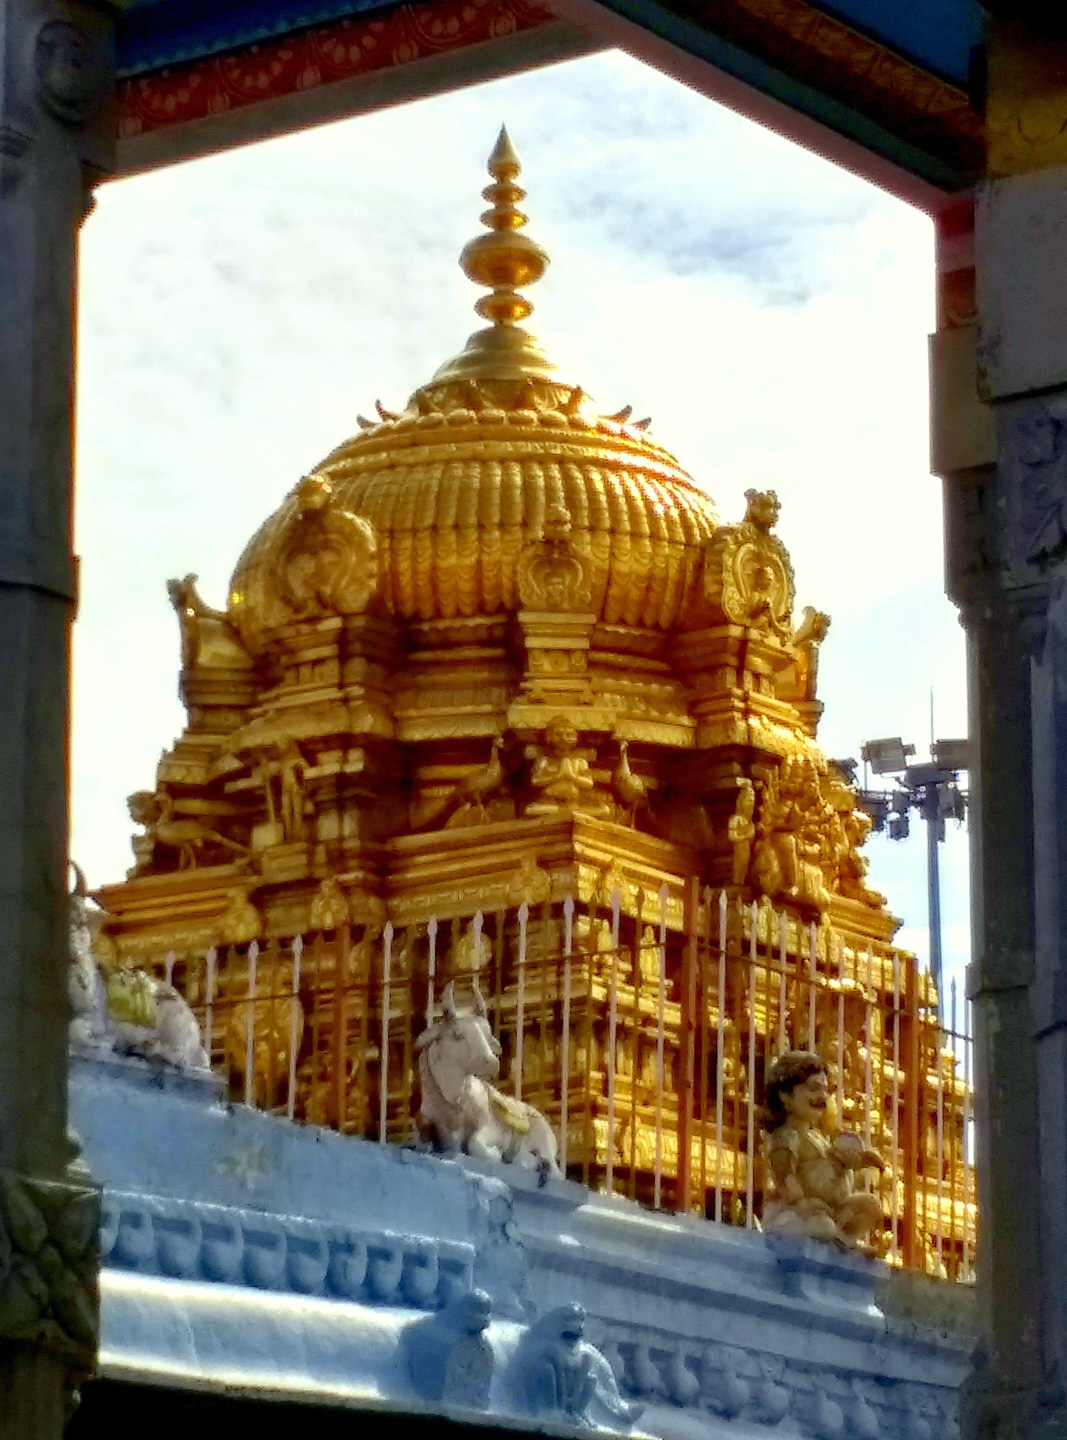 Arulmigu Shri Dhandayuthapani Murugan Temple, Palani-Tamil Nadu- India
- Palani, Tamil Nadu – India